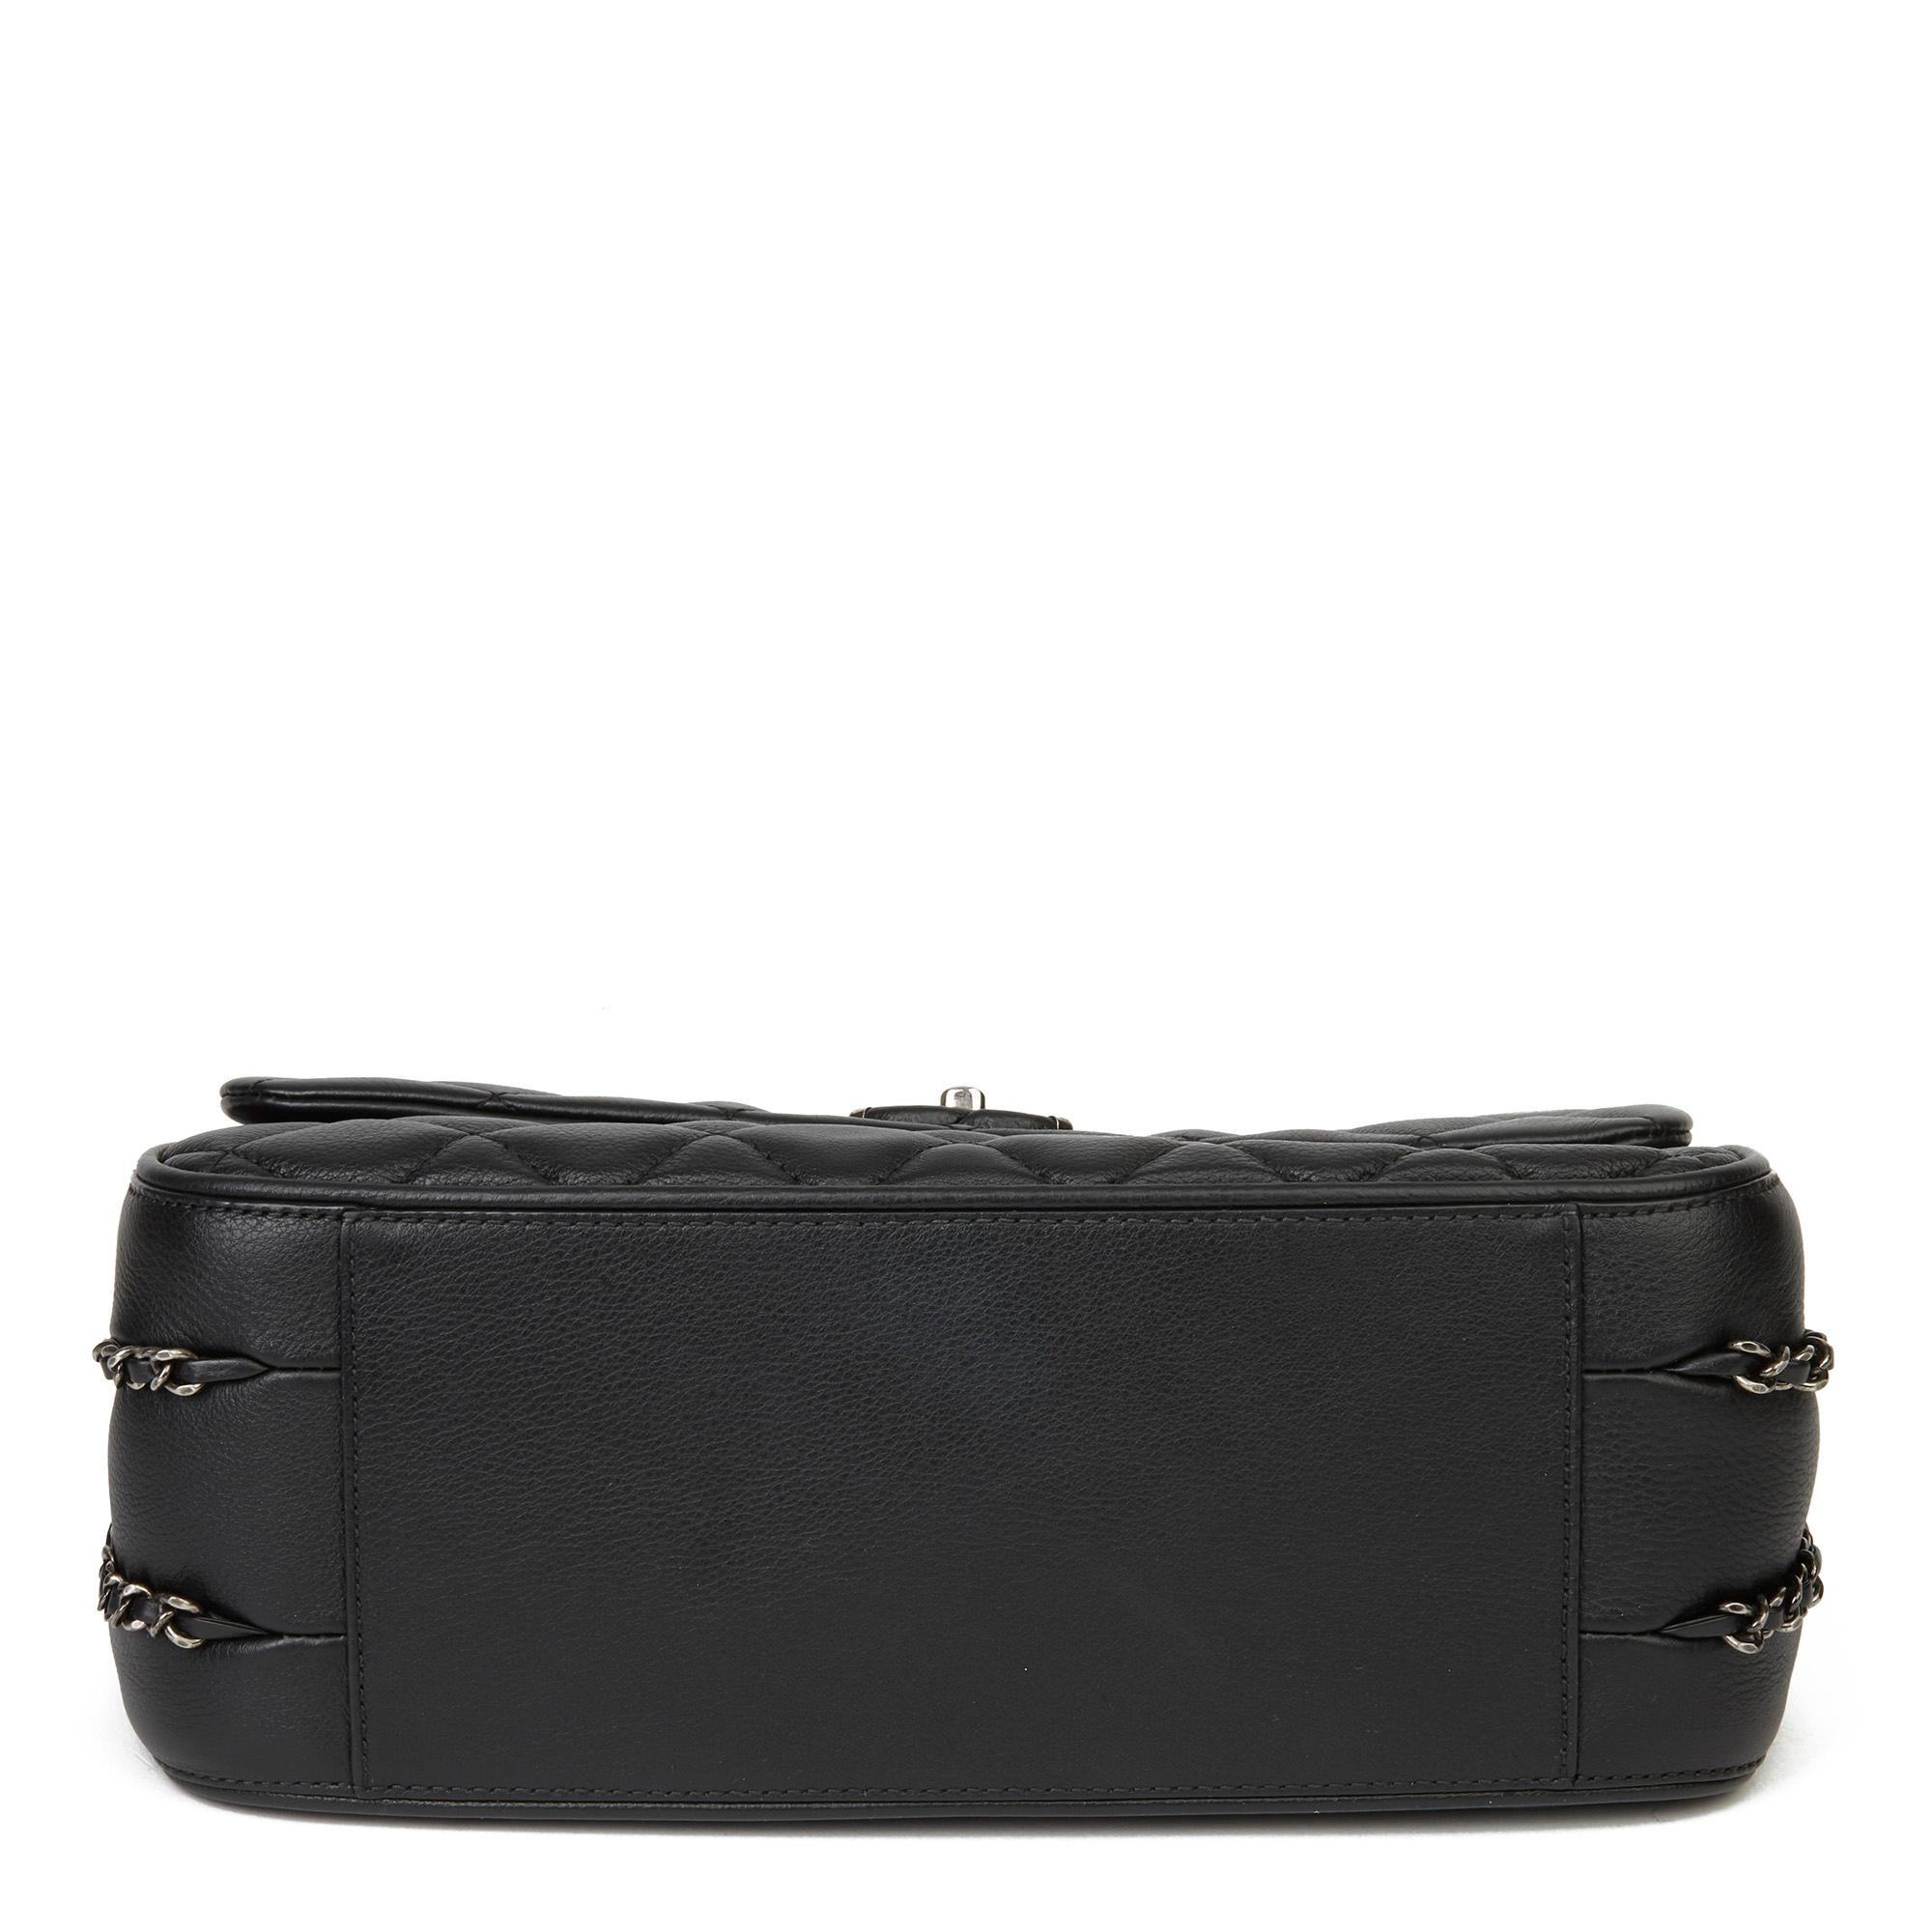 2017 Chanel Black Quilted Calfskin Leather Medium Frame in Chain Flap Bag In Excellent Condition In Bishop's Stortford, Hertfordshire